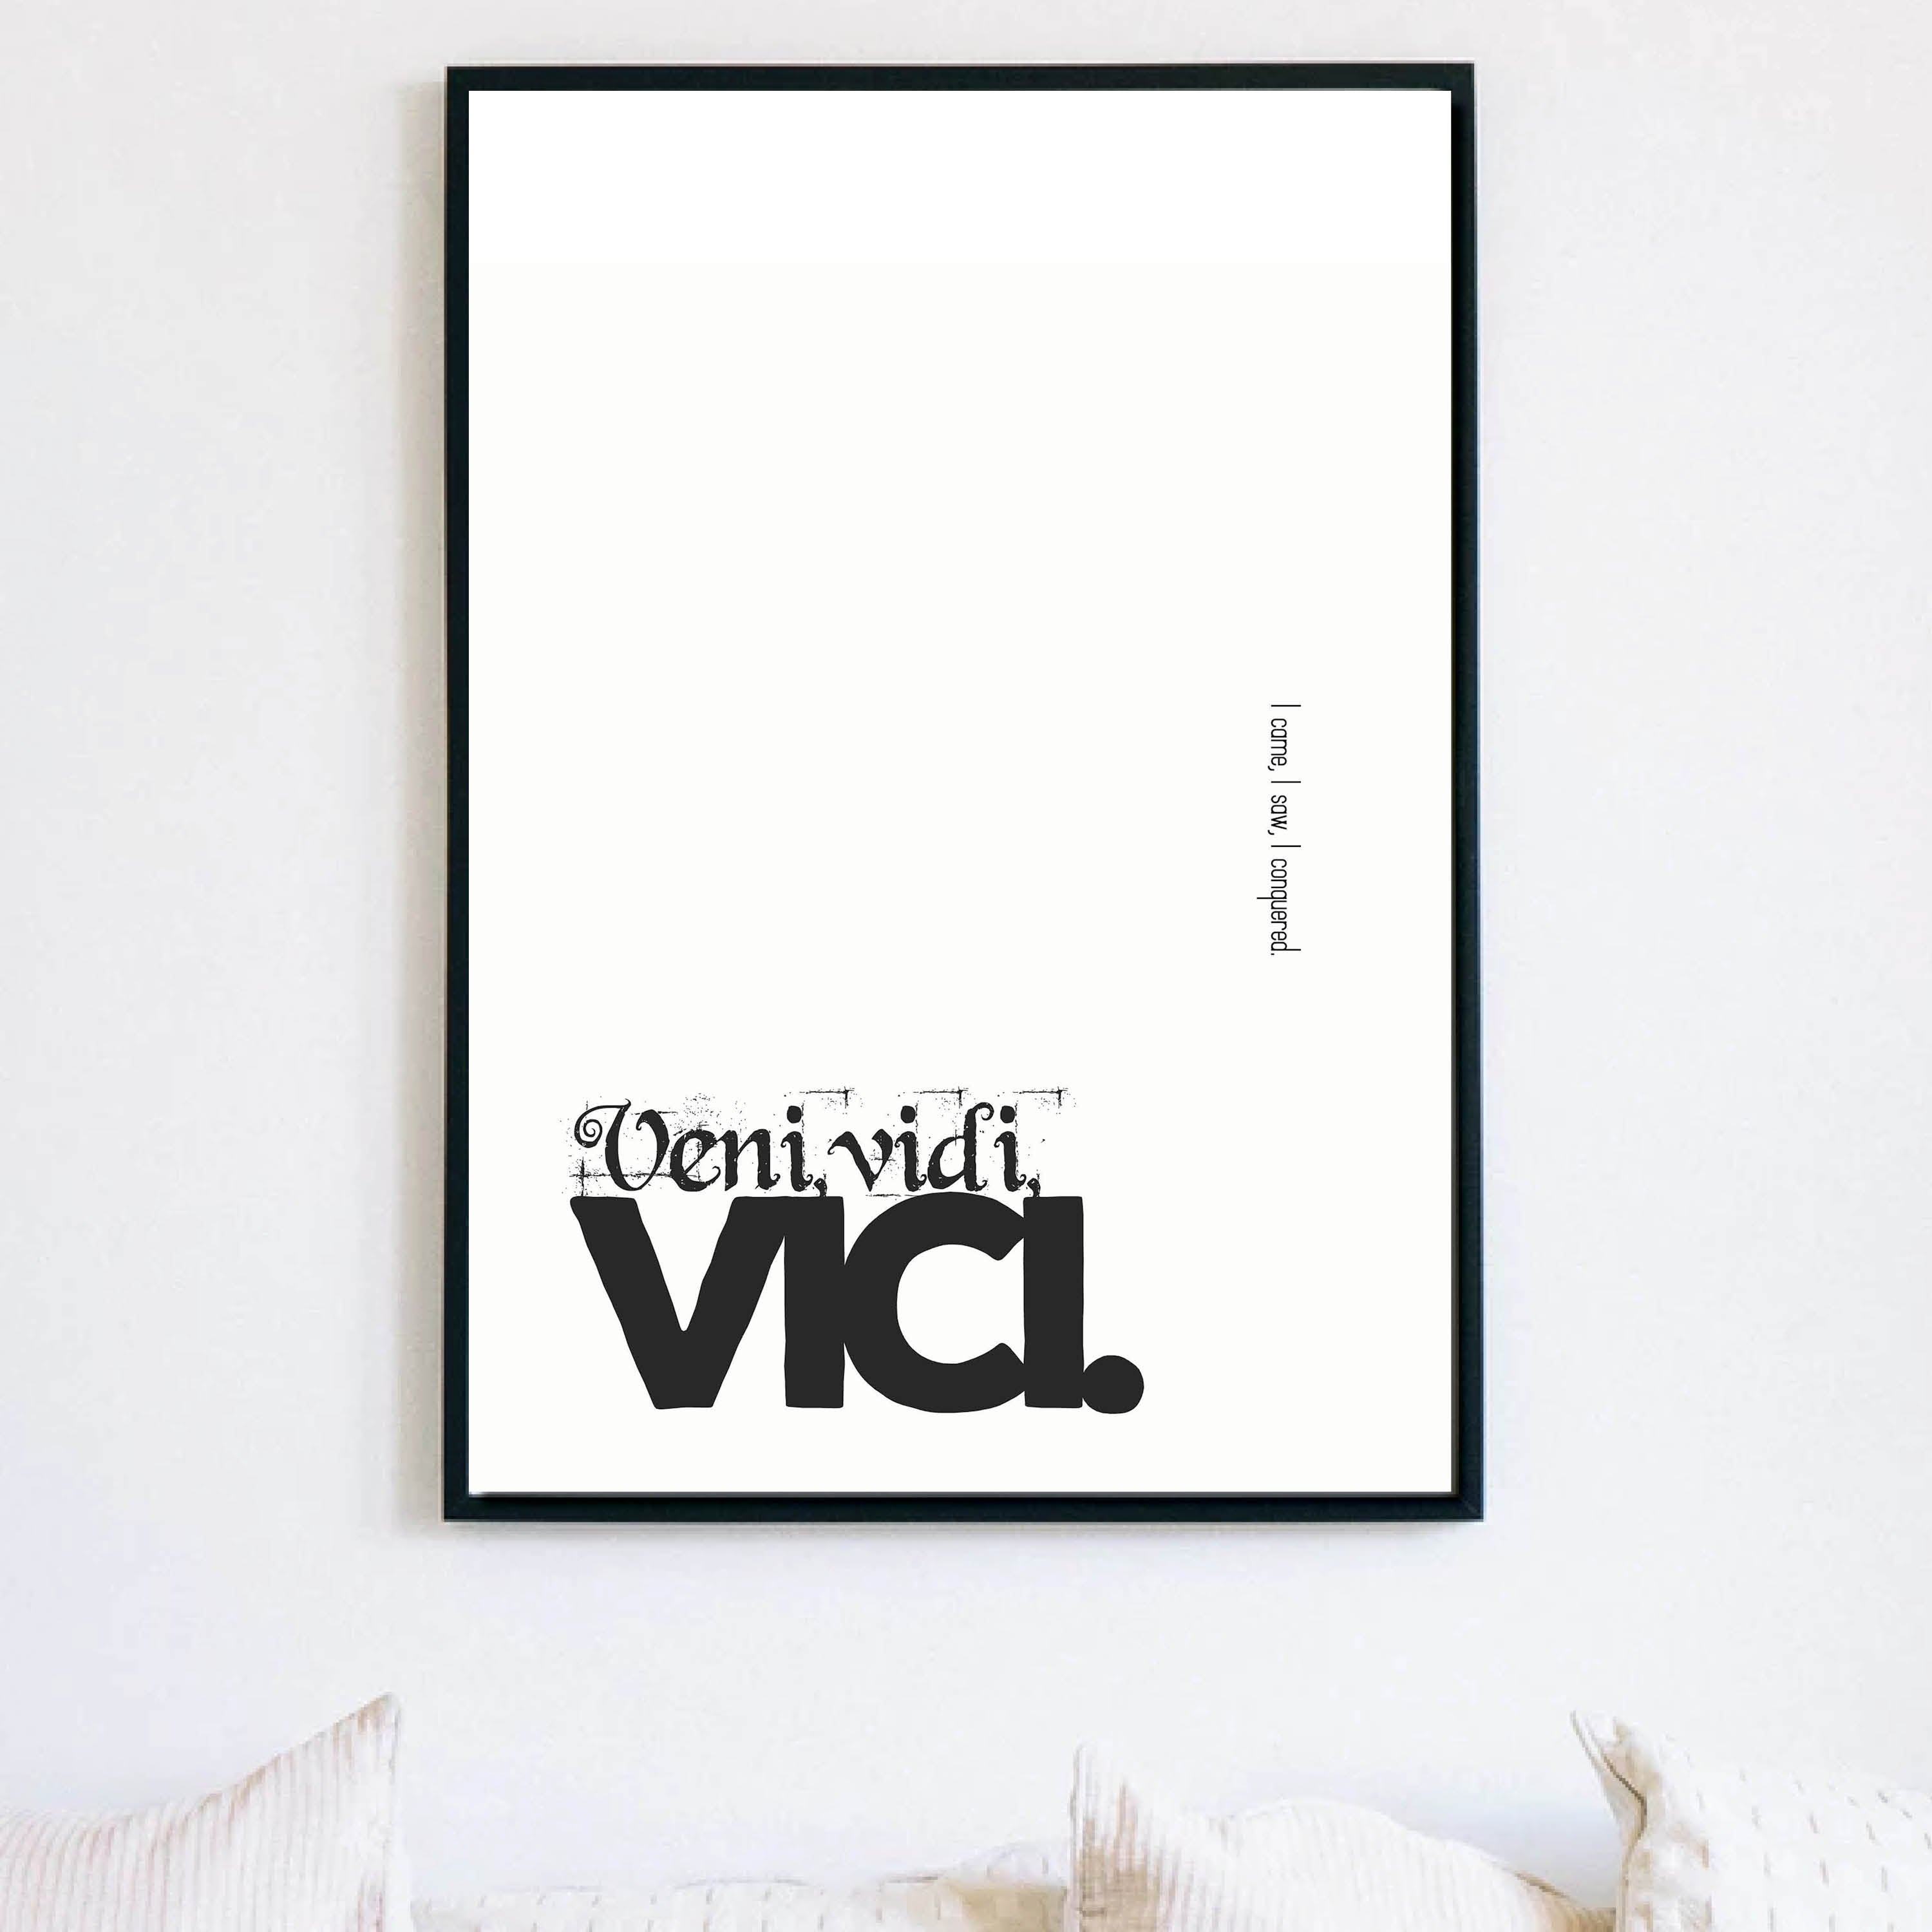 Veni Vidi Vici Latin Quote Poster Translation Came Saw Conquered Stock  Vector by ©Simeon.VD 396210030